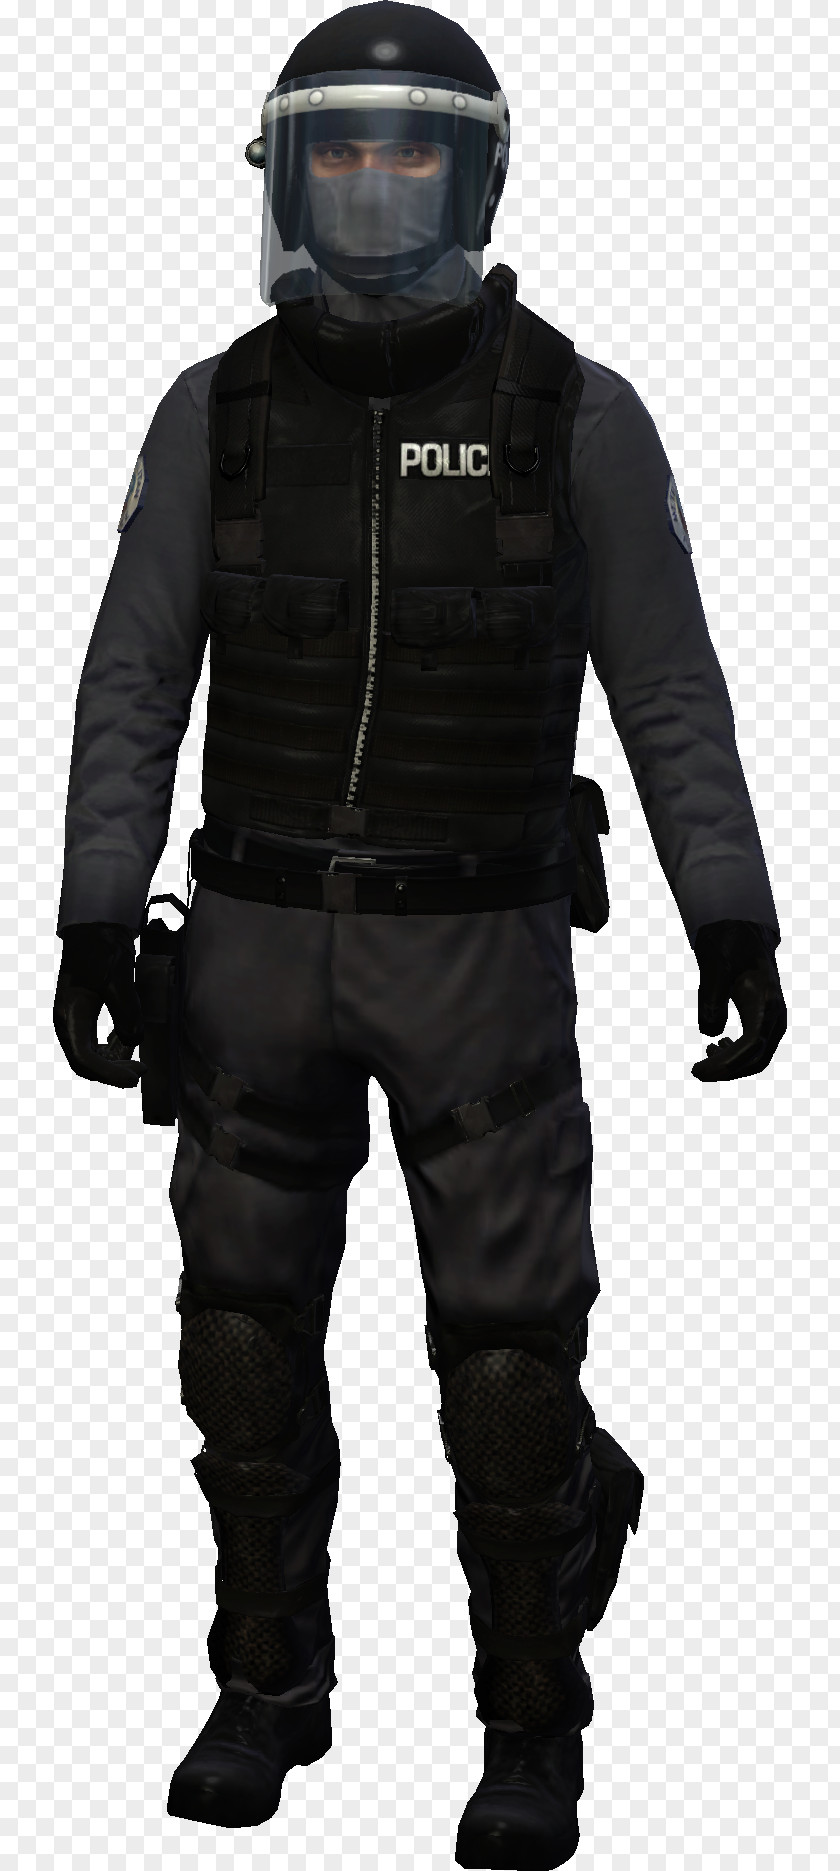 Swat SWAT Uniform Police Jacket Pants PNG